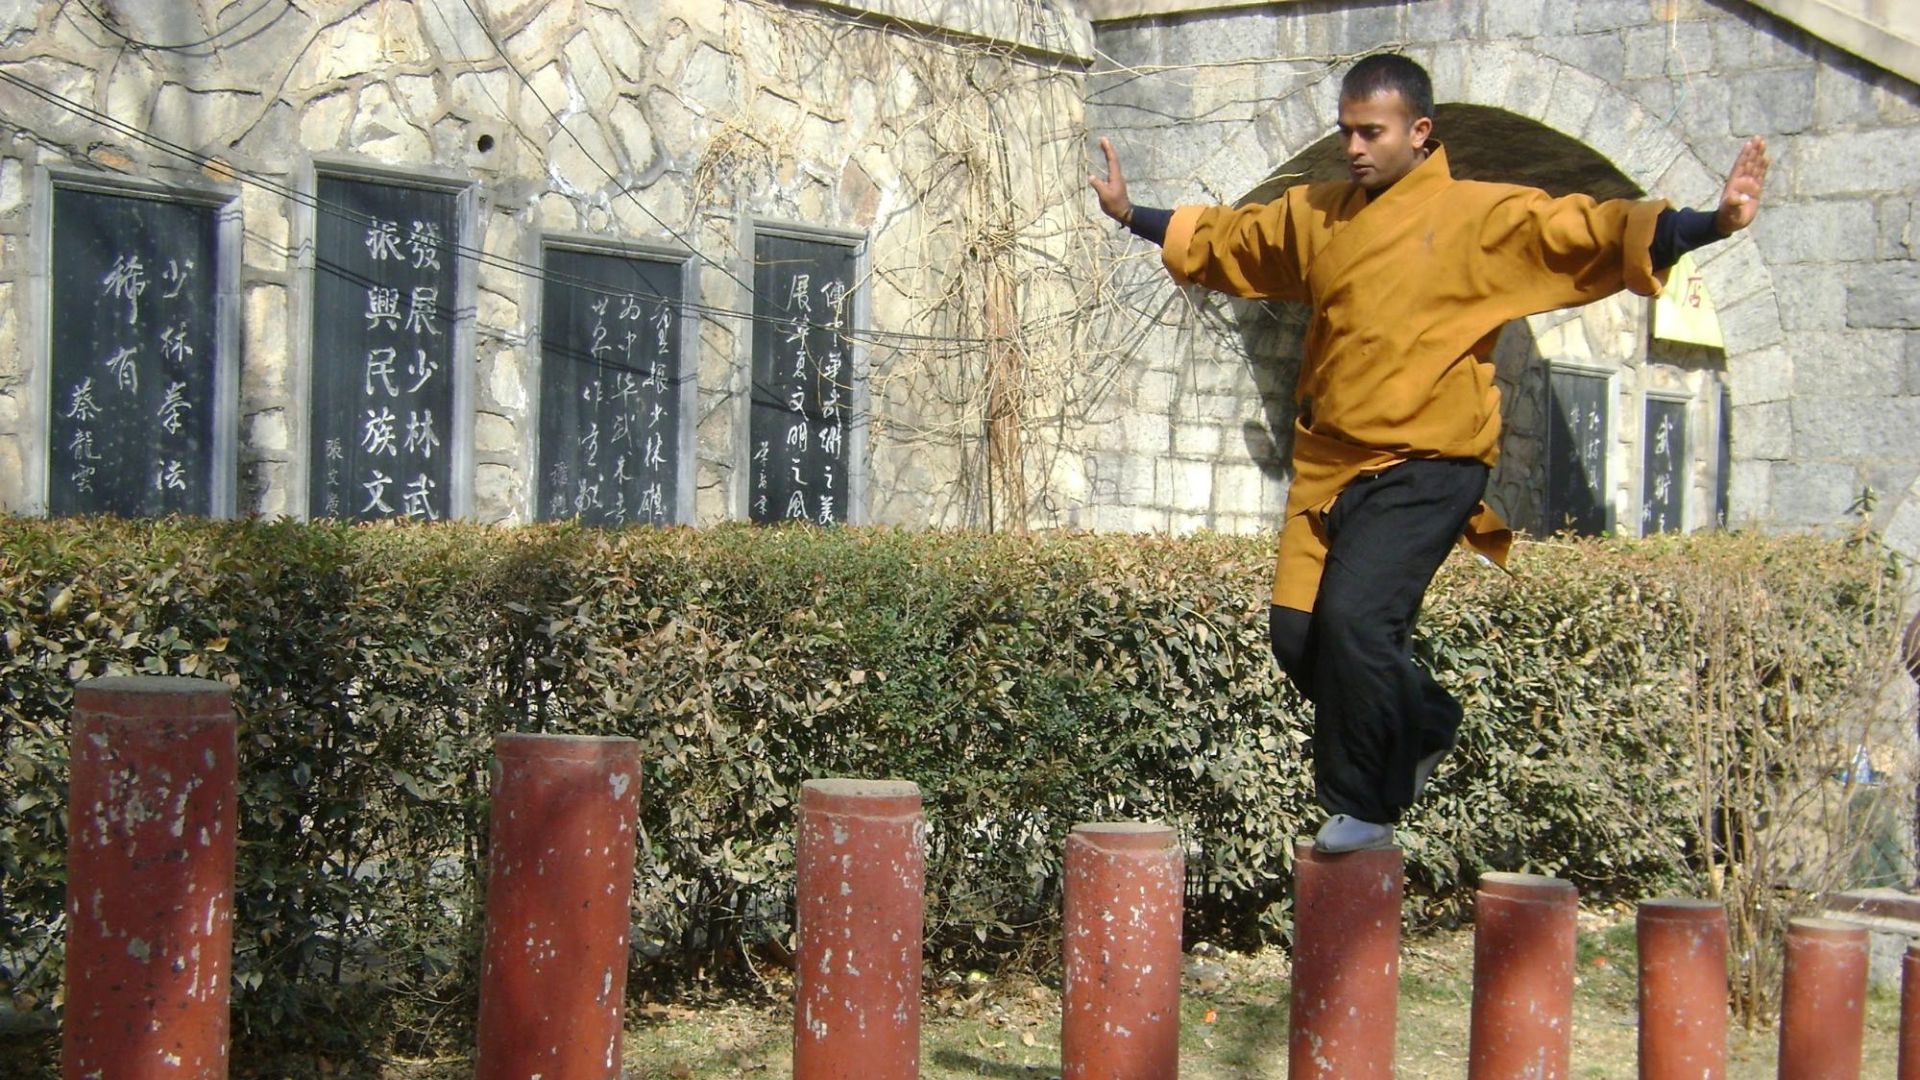 Shaolin Warrior Monk Training